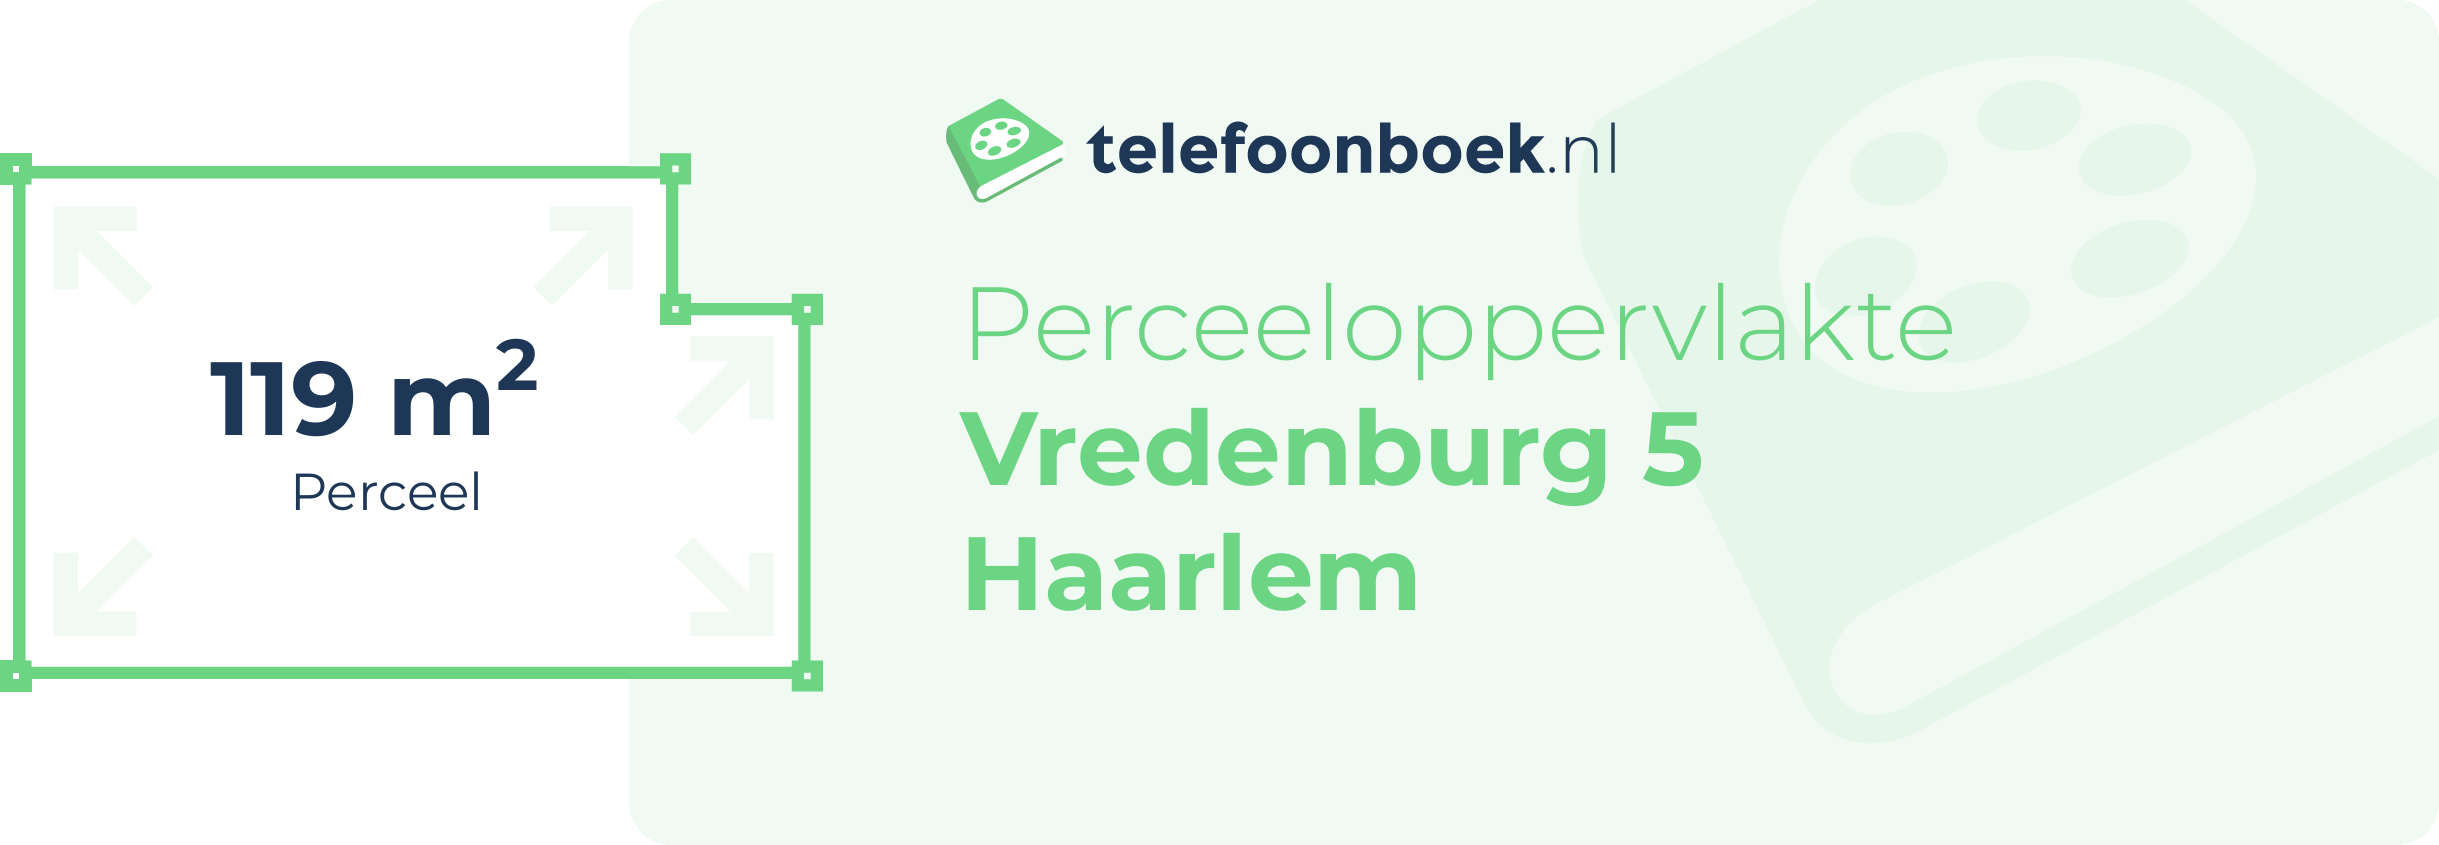 Perceeloppervlakte Vredenburg 5 Haarlem